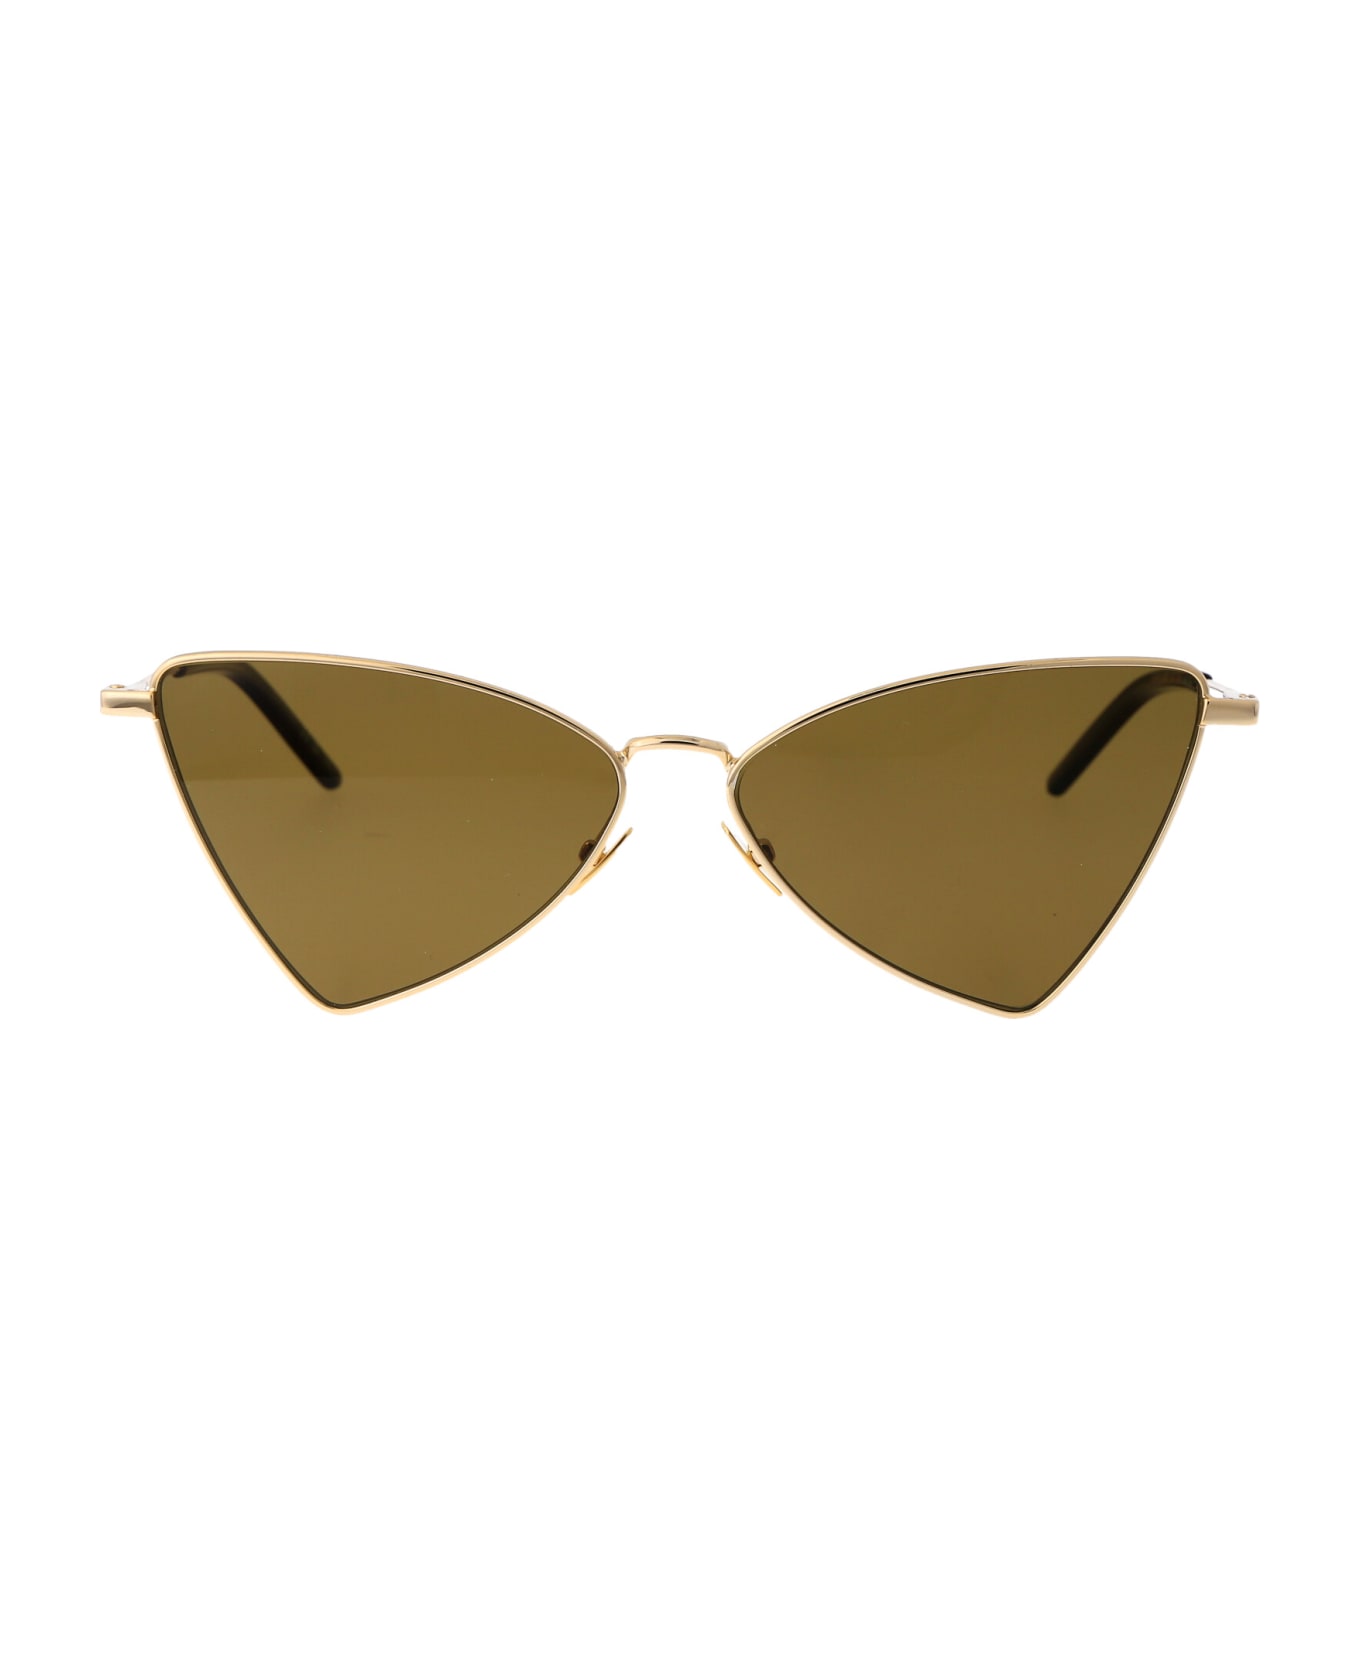 Saint Laurent Eyewear Sl 303 Jerry Sunglasses - 011 GOLD GOLD BROWN